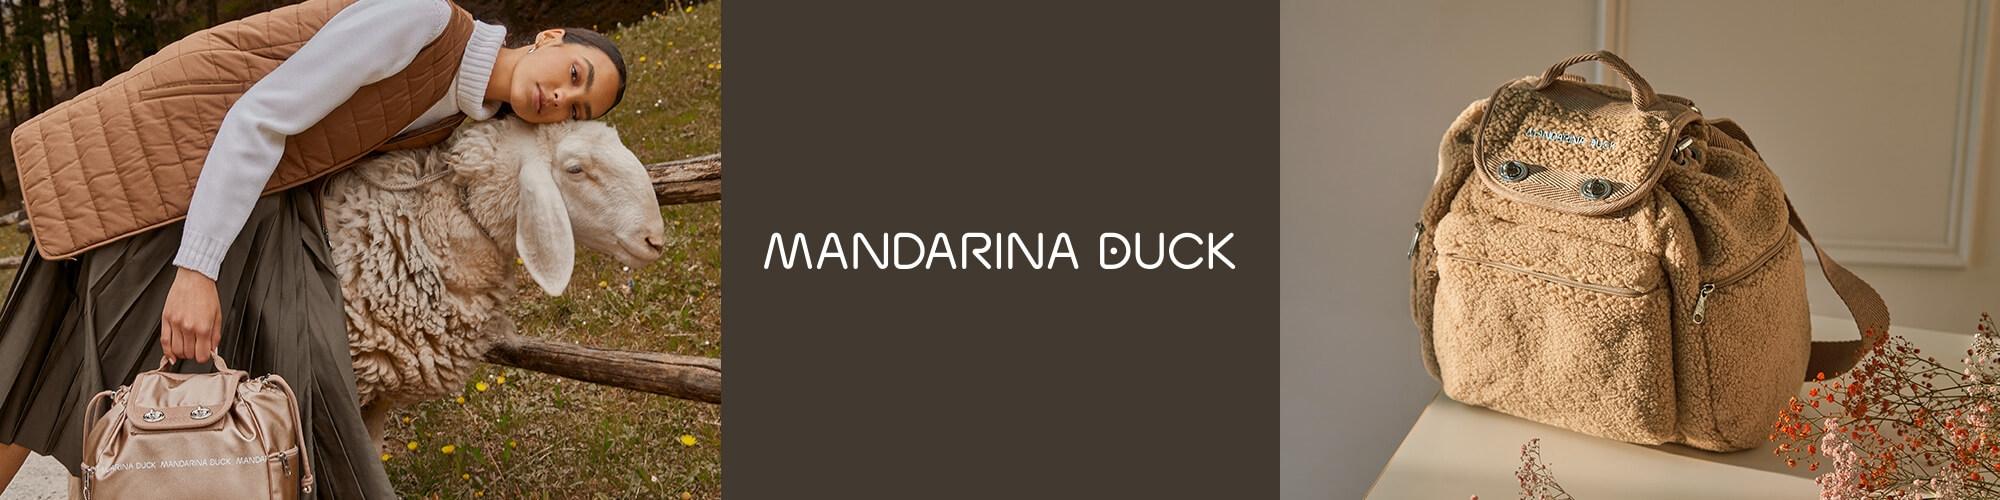 Mandarina+DuckMandarina Duck Hunter P10vcm04 Femme 